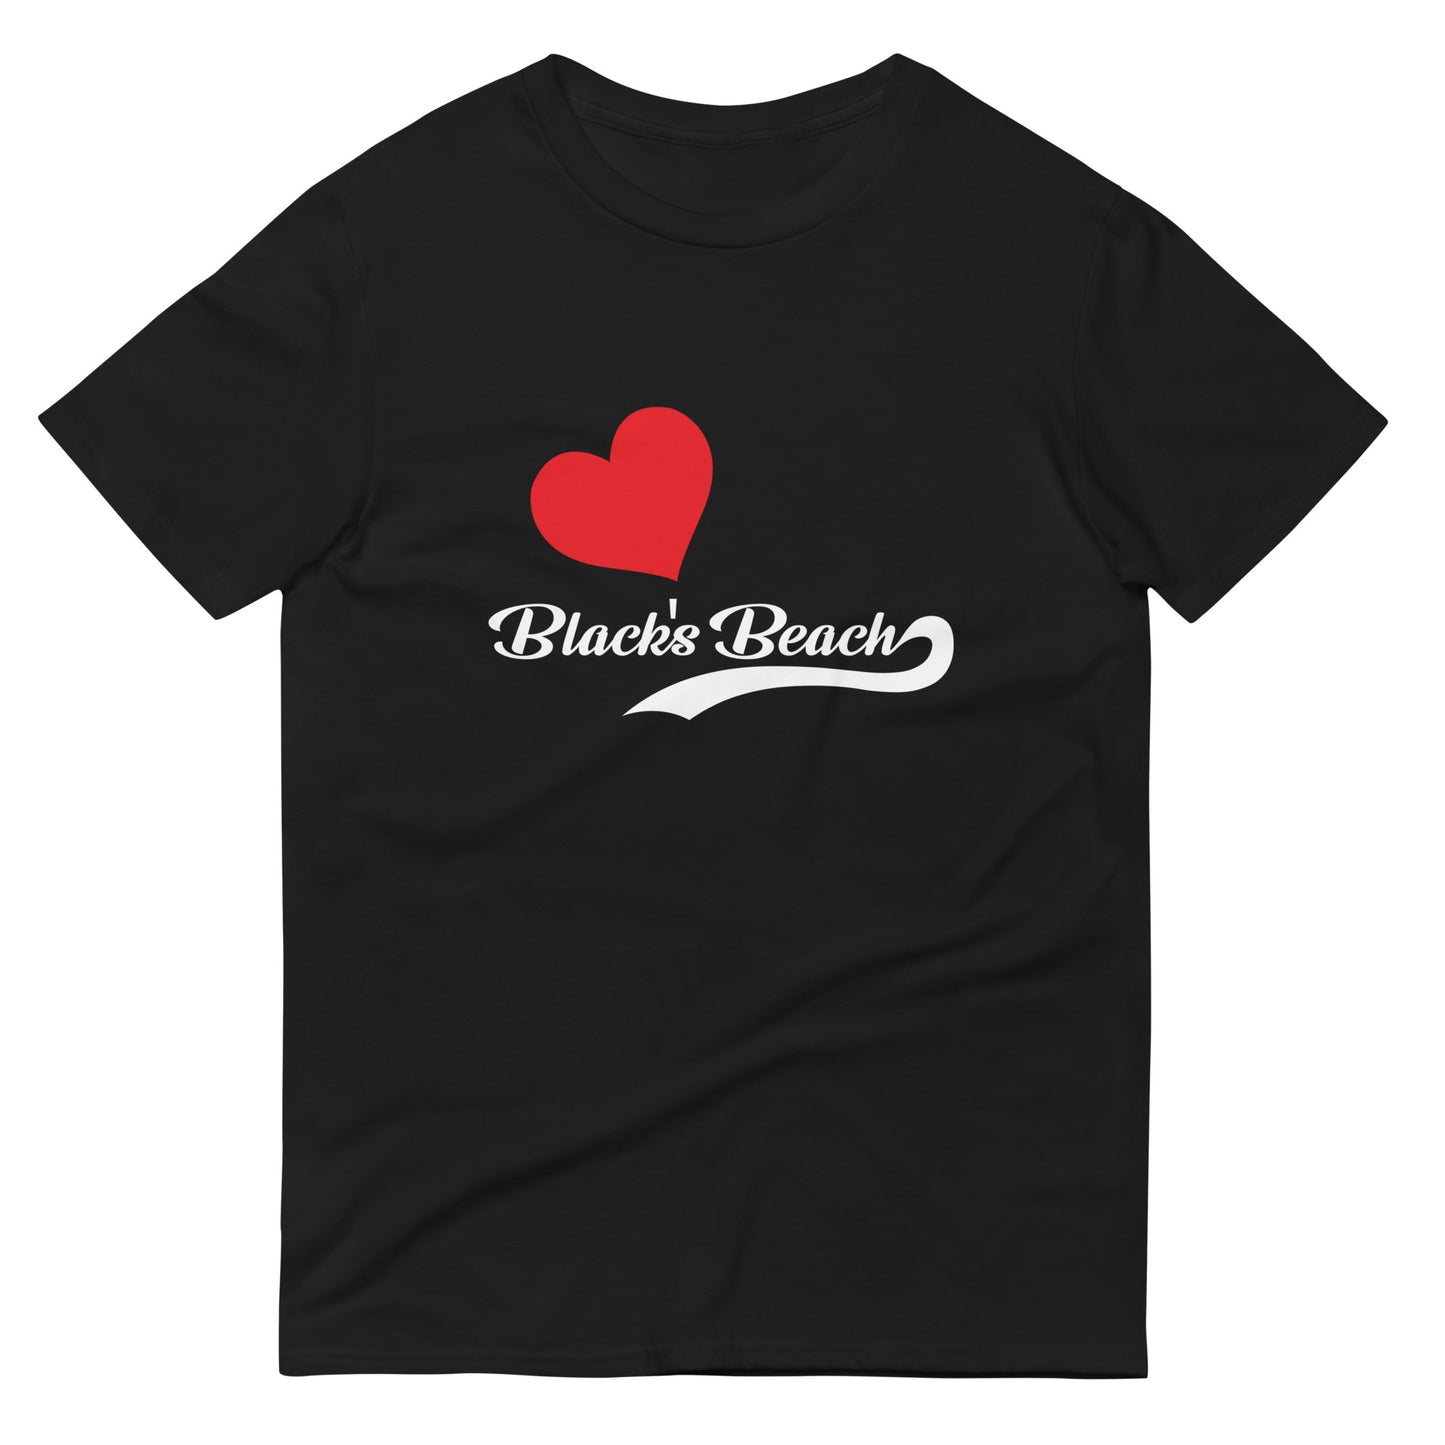 Black's Beach Tees / Style 29 / Short-Sleeve T-Shirt